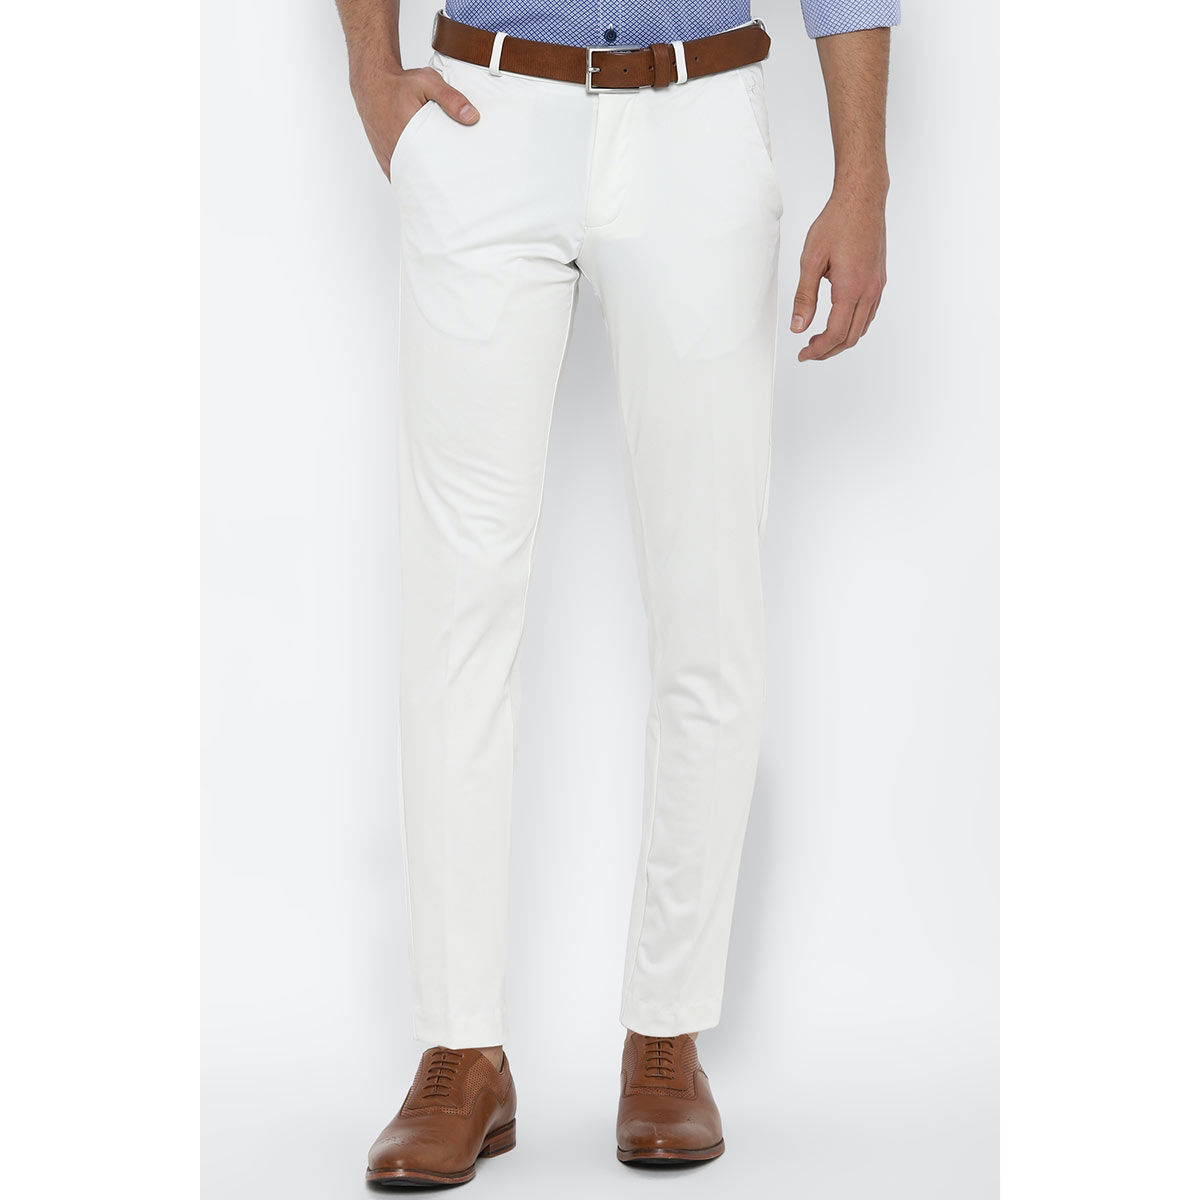 Buy Allen Solly White  Grey Striped Trousers for Women Online  Tata CLiQ